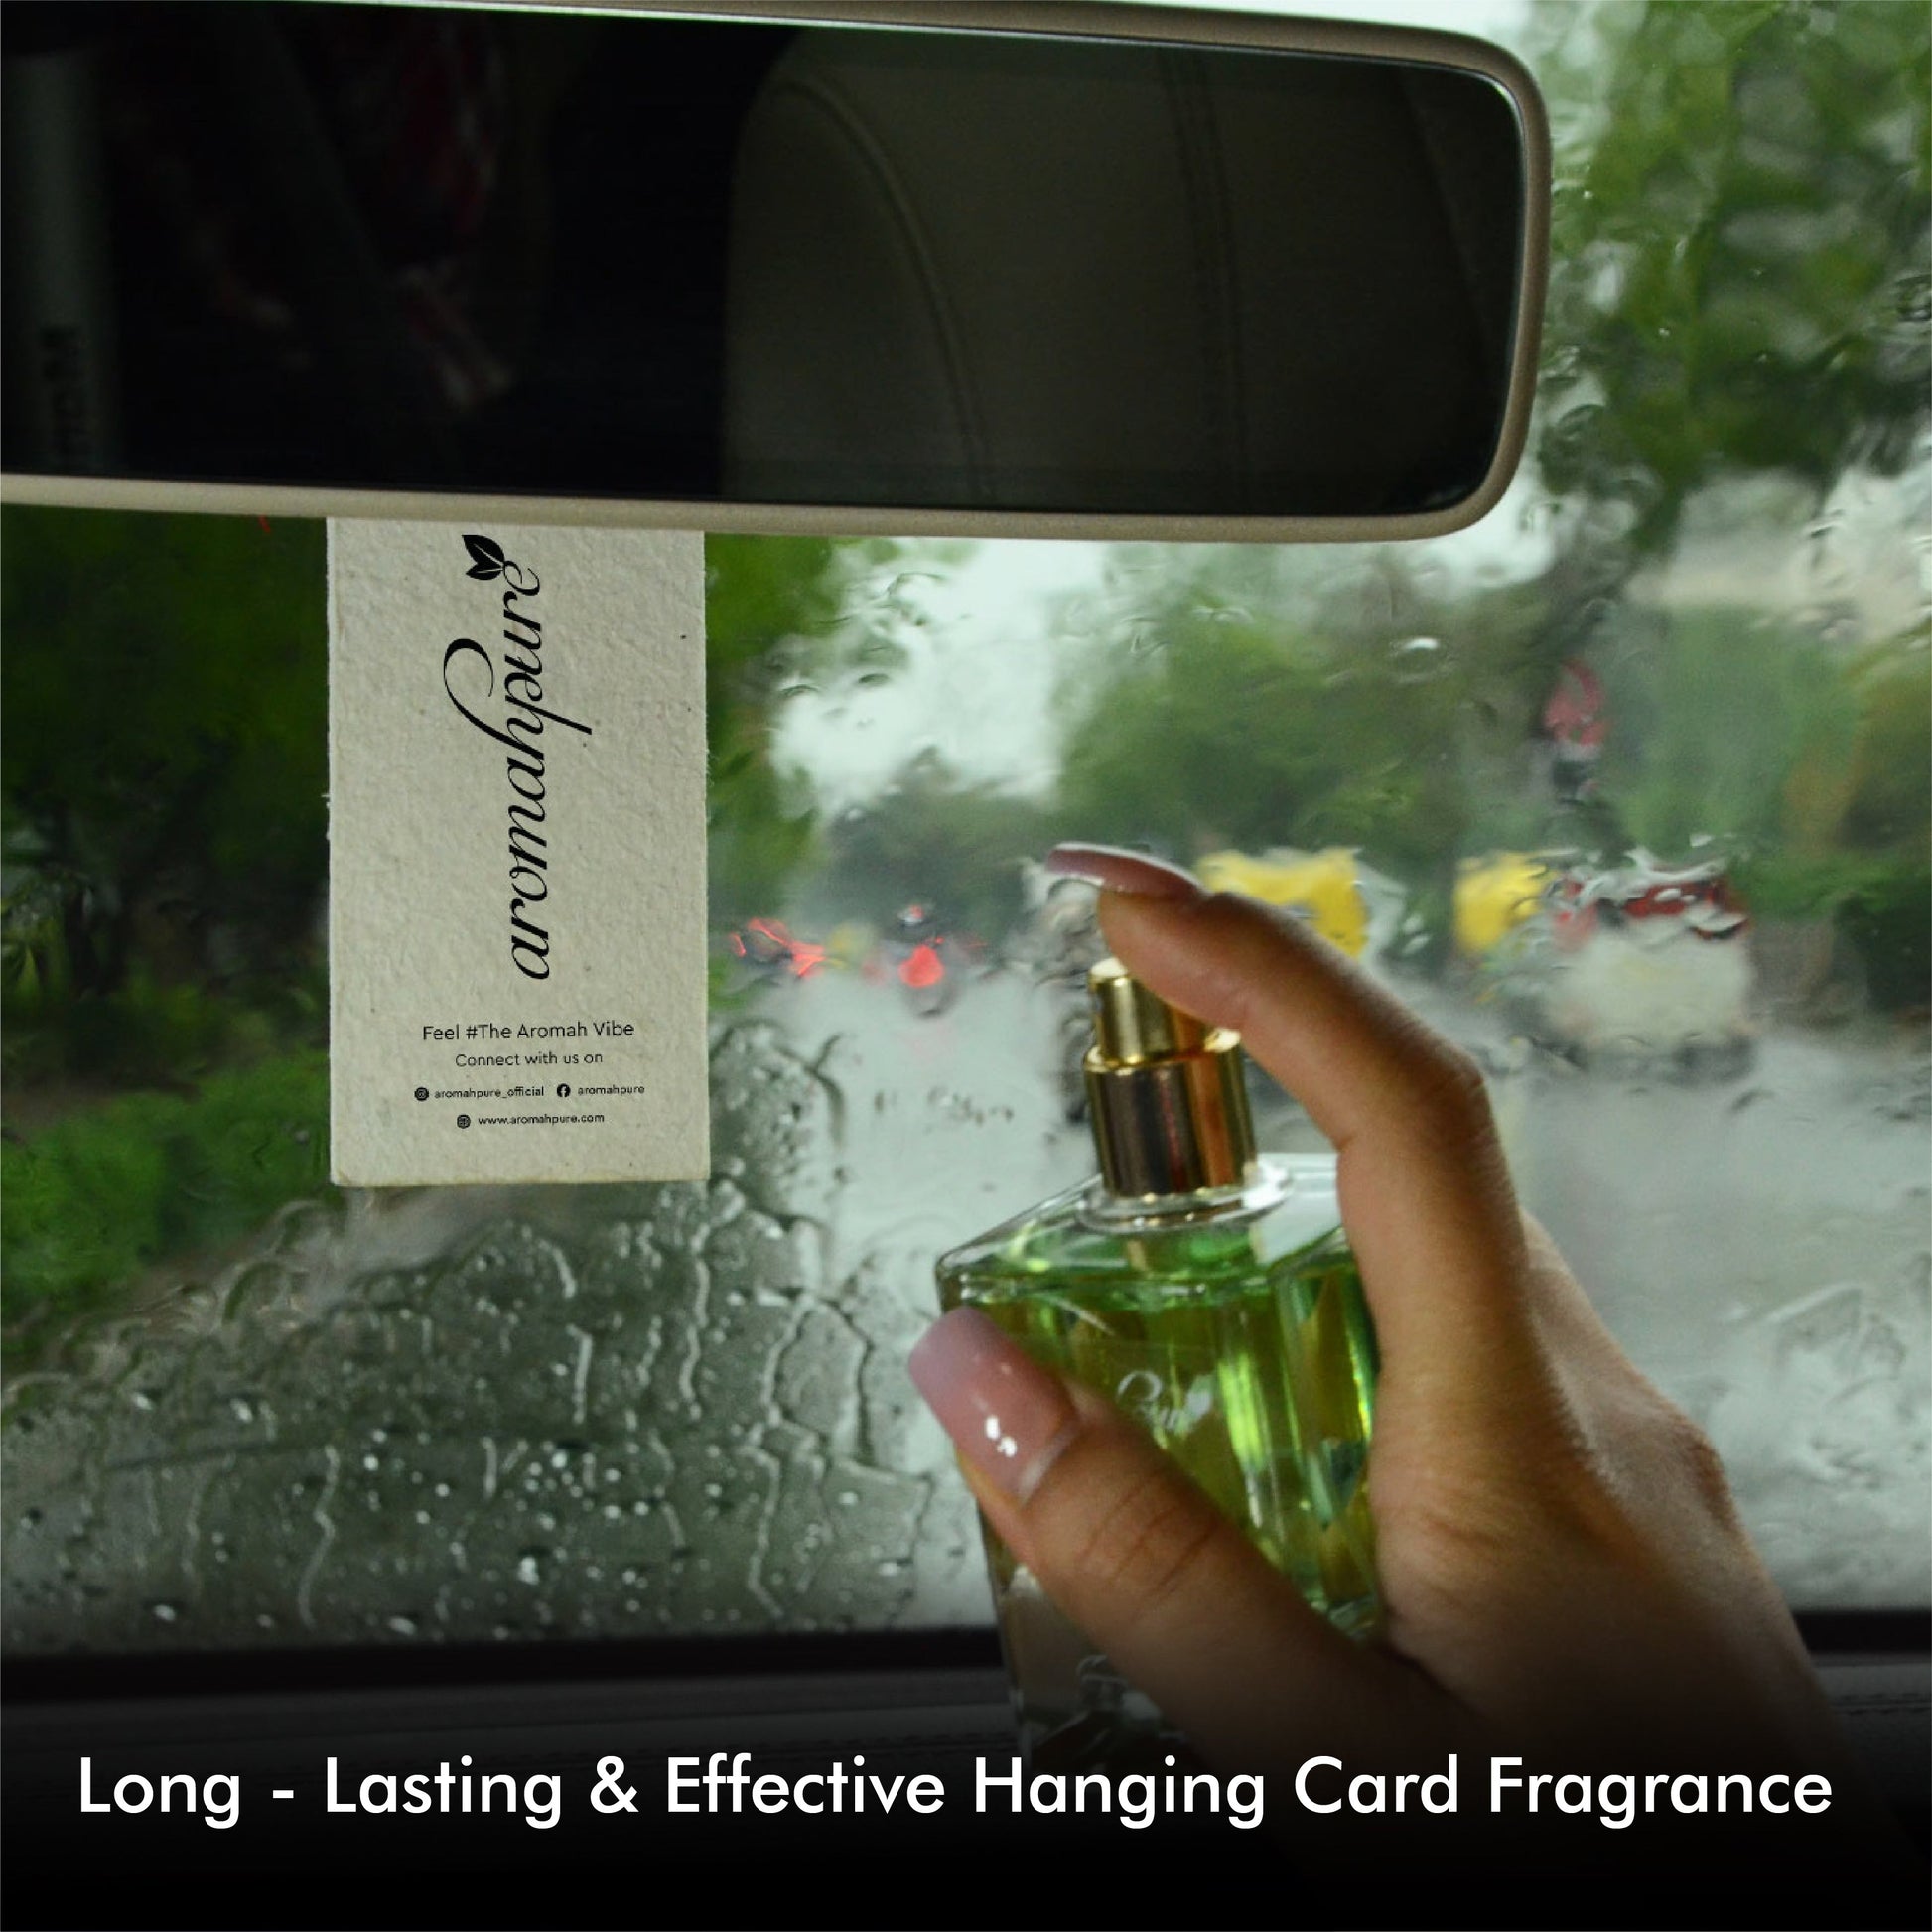 Aromahpure Refreshing Car Perfume Spray with Hanging Card | 45ml | Cool  splash - Lemon, mint Car Freshener | Car Freshener Hanging | Car  Accessories